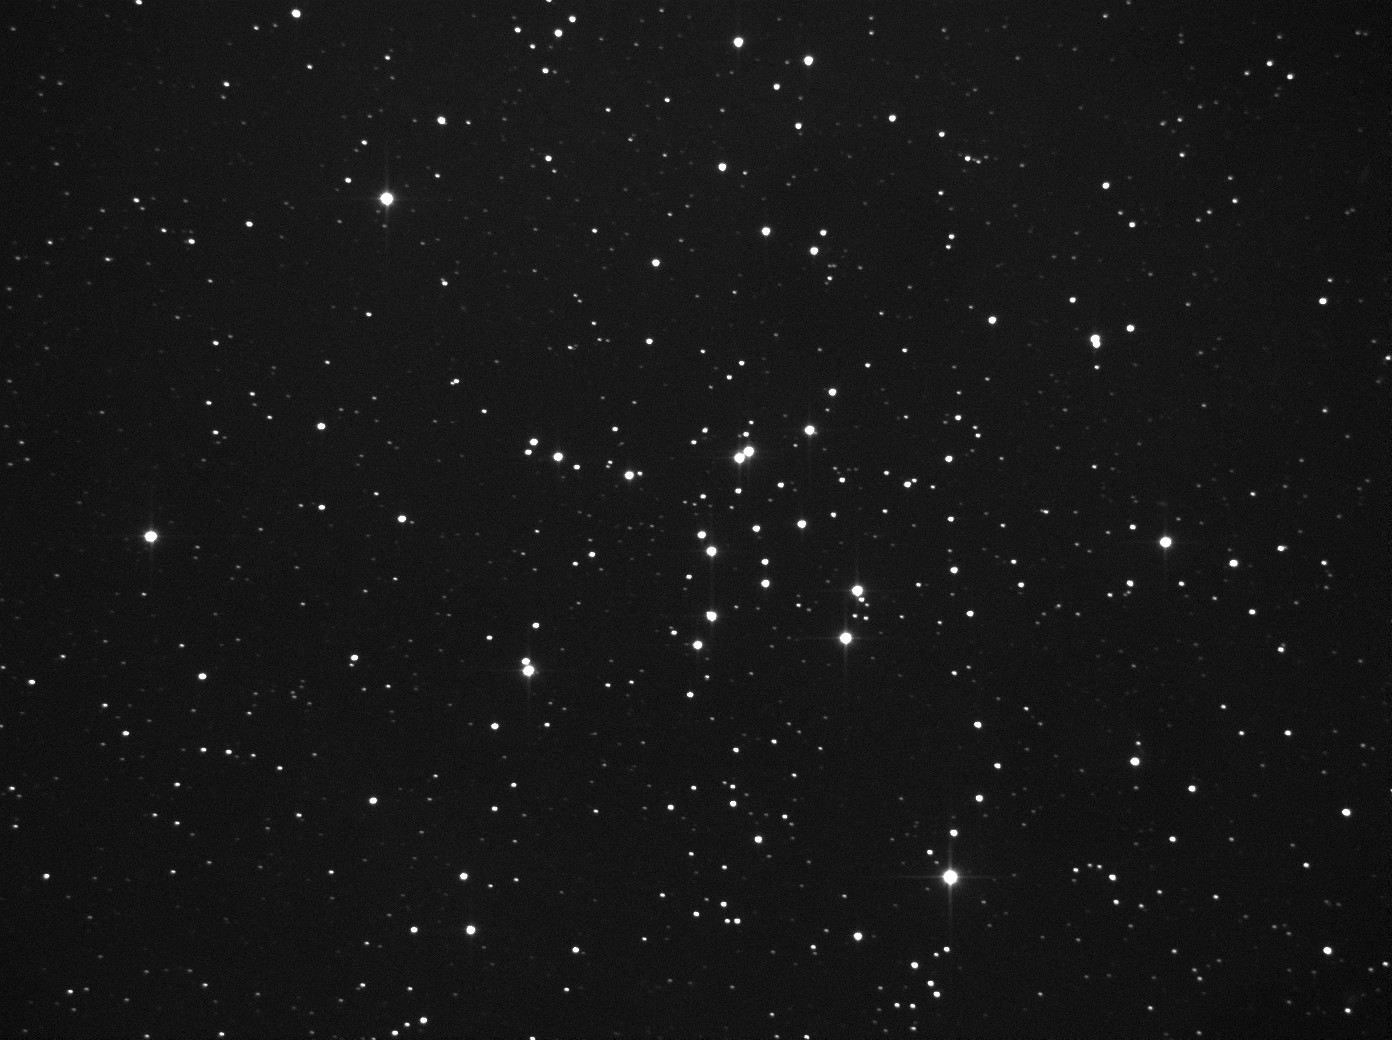 Spiral cluster_M34_4x45s.jpg